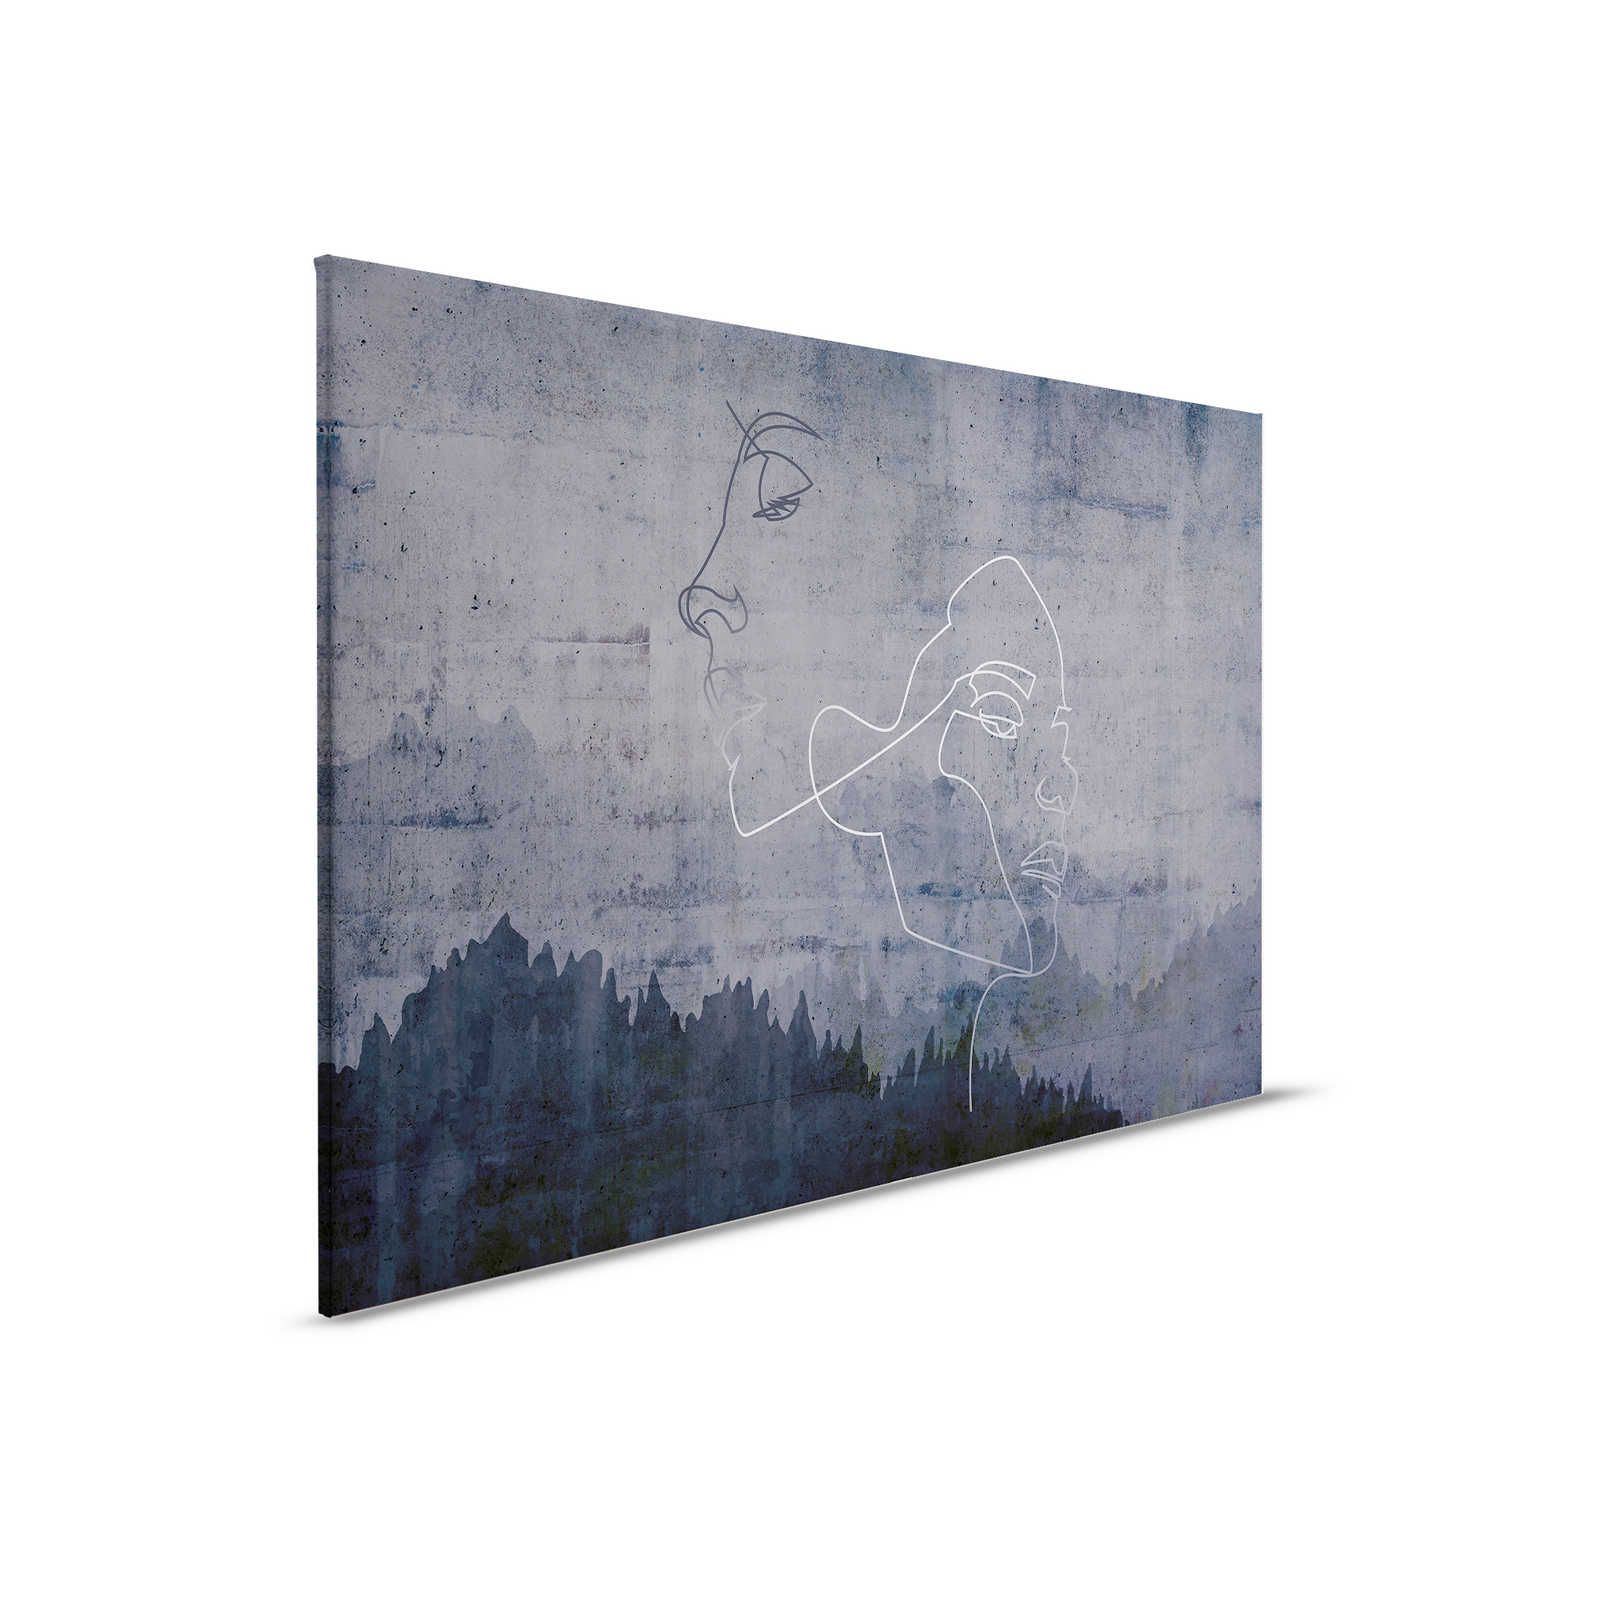         Leinwandbild Anthrazit Betonoptik & silber Liniendesign – 0,90 m x 0,60 m
    